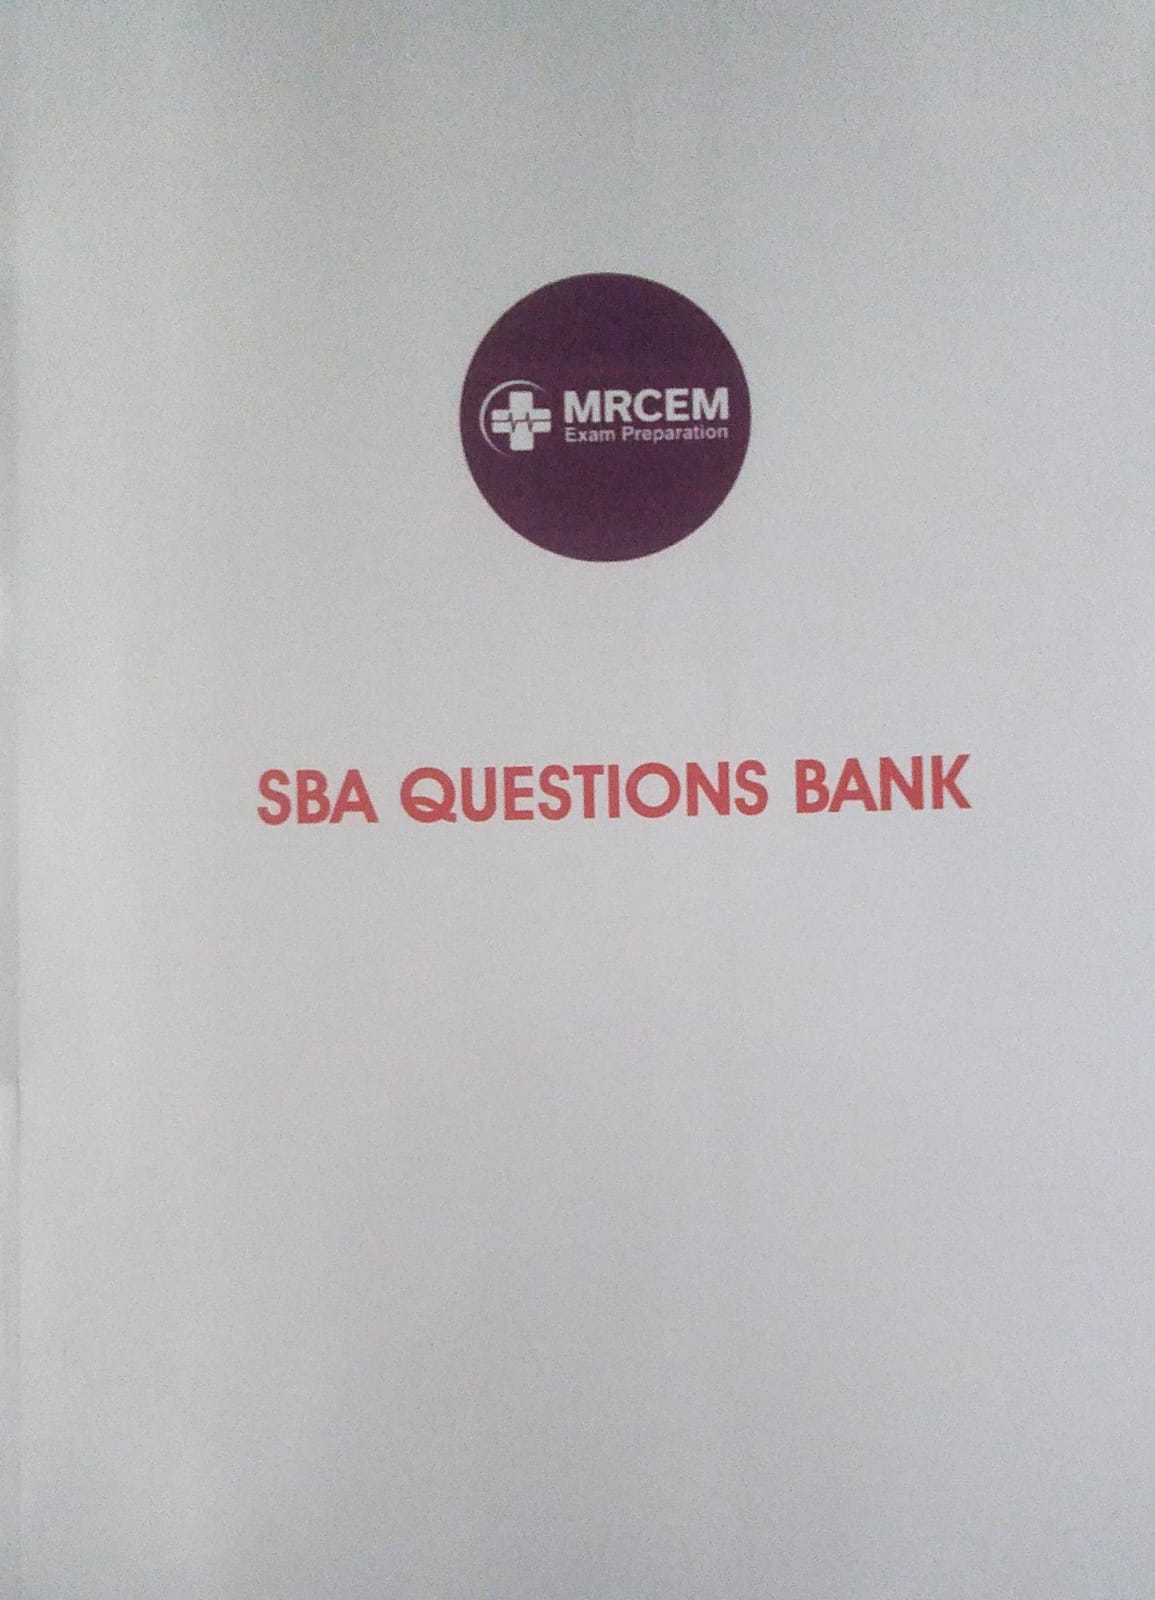 MRCEM EXAM PREPARATION SBA QUESTIONS BANK